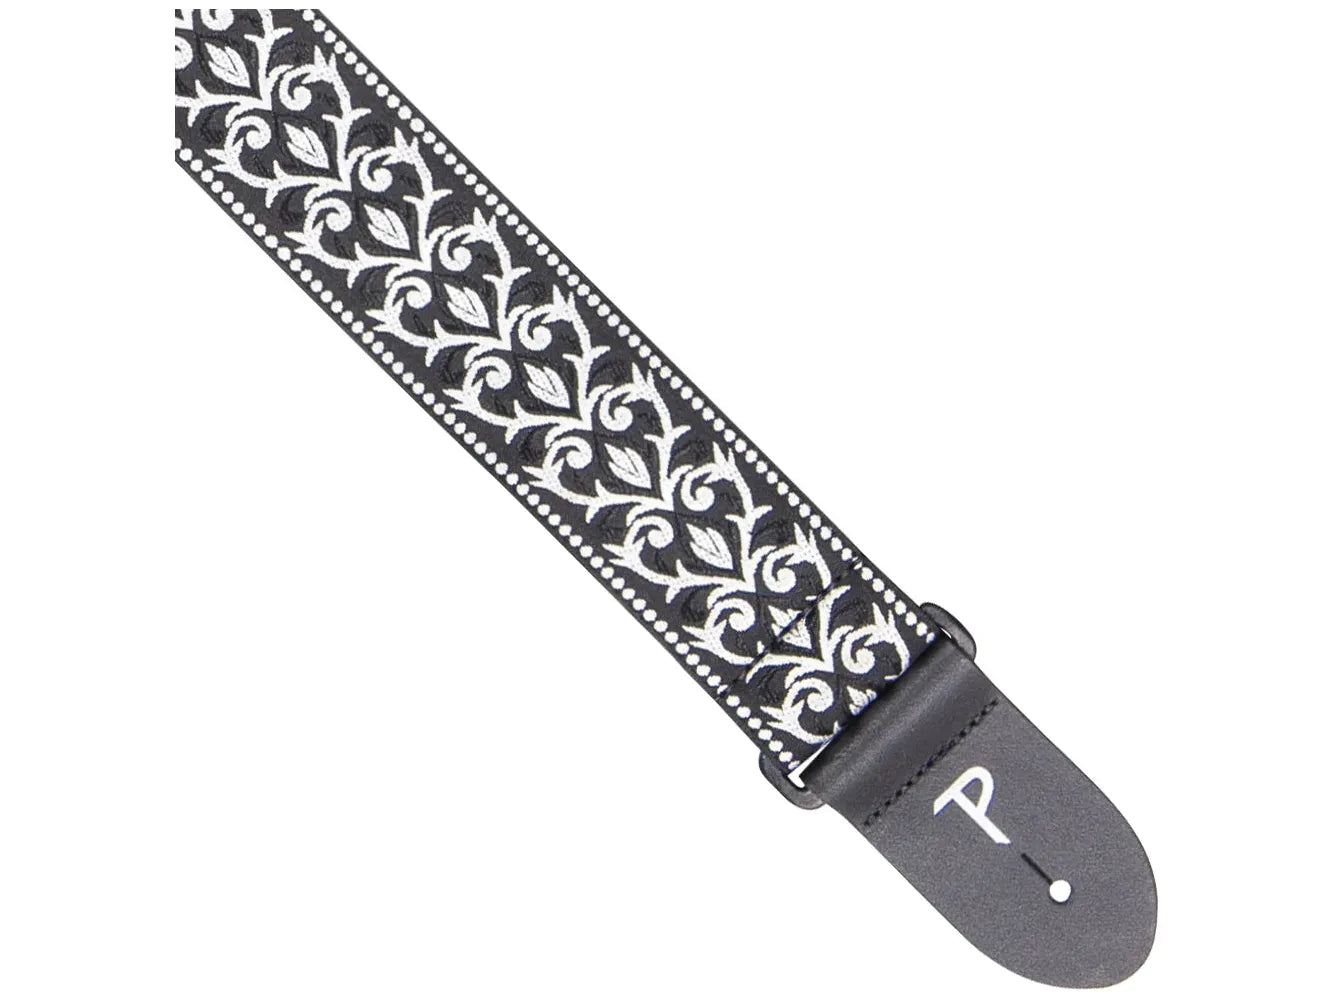 Perri's Polyester/Webbing Guitar Strap ~ Black/White Check – The